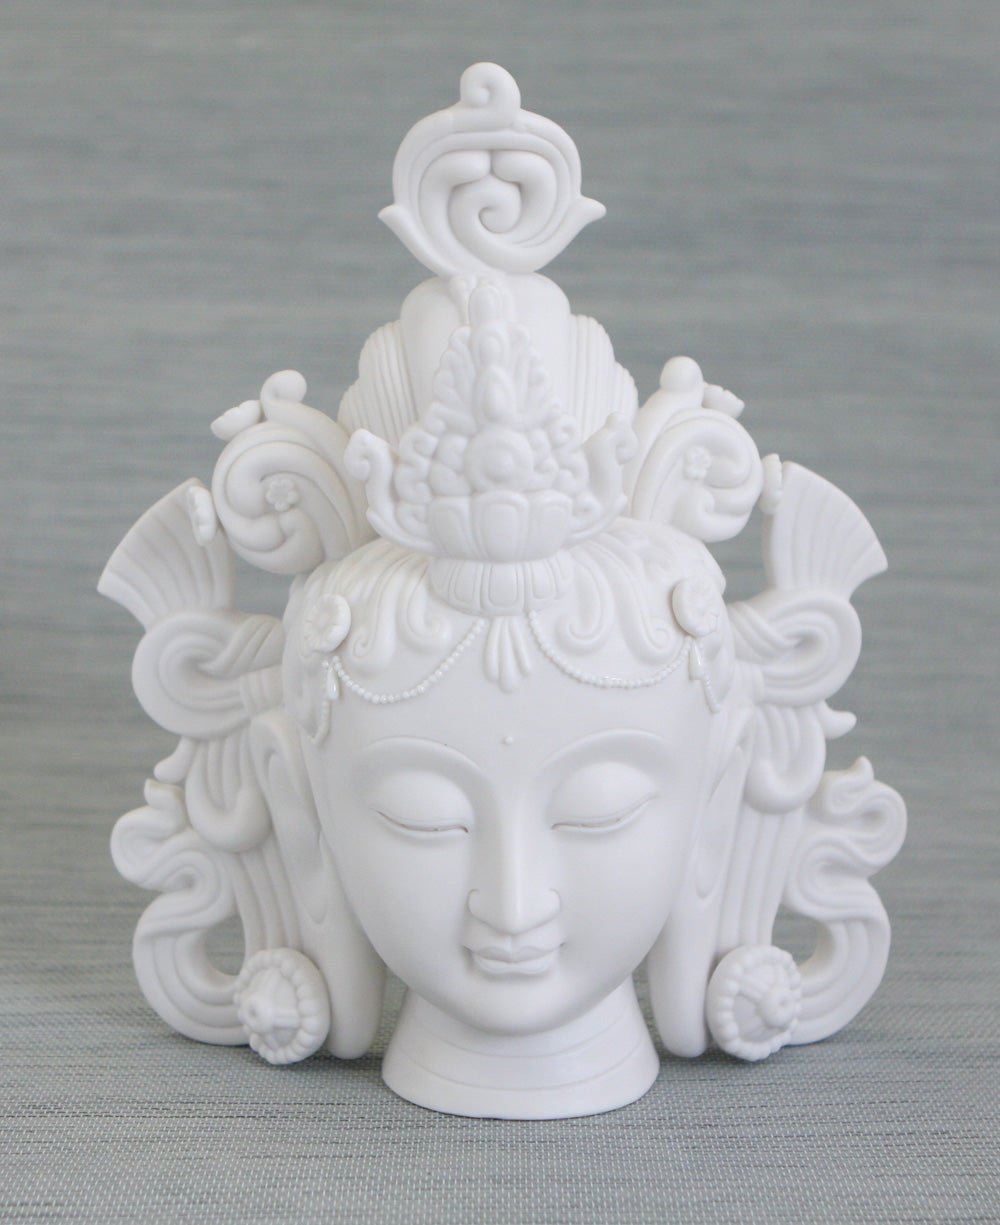 Face of Tara, White Porcelain Statue - Sculptures & Statues